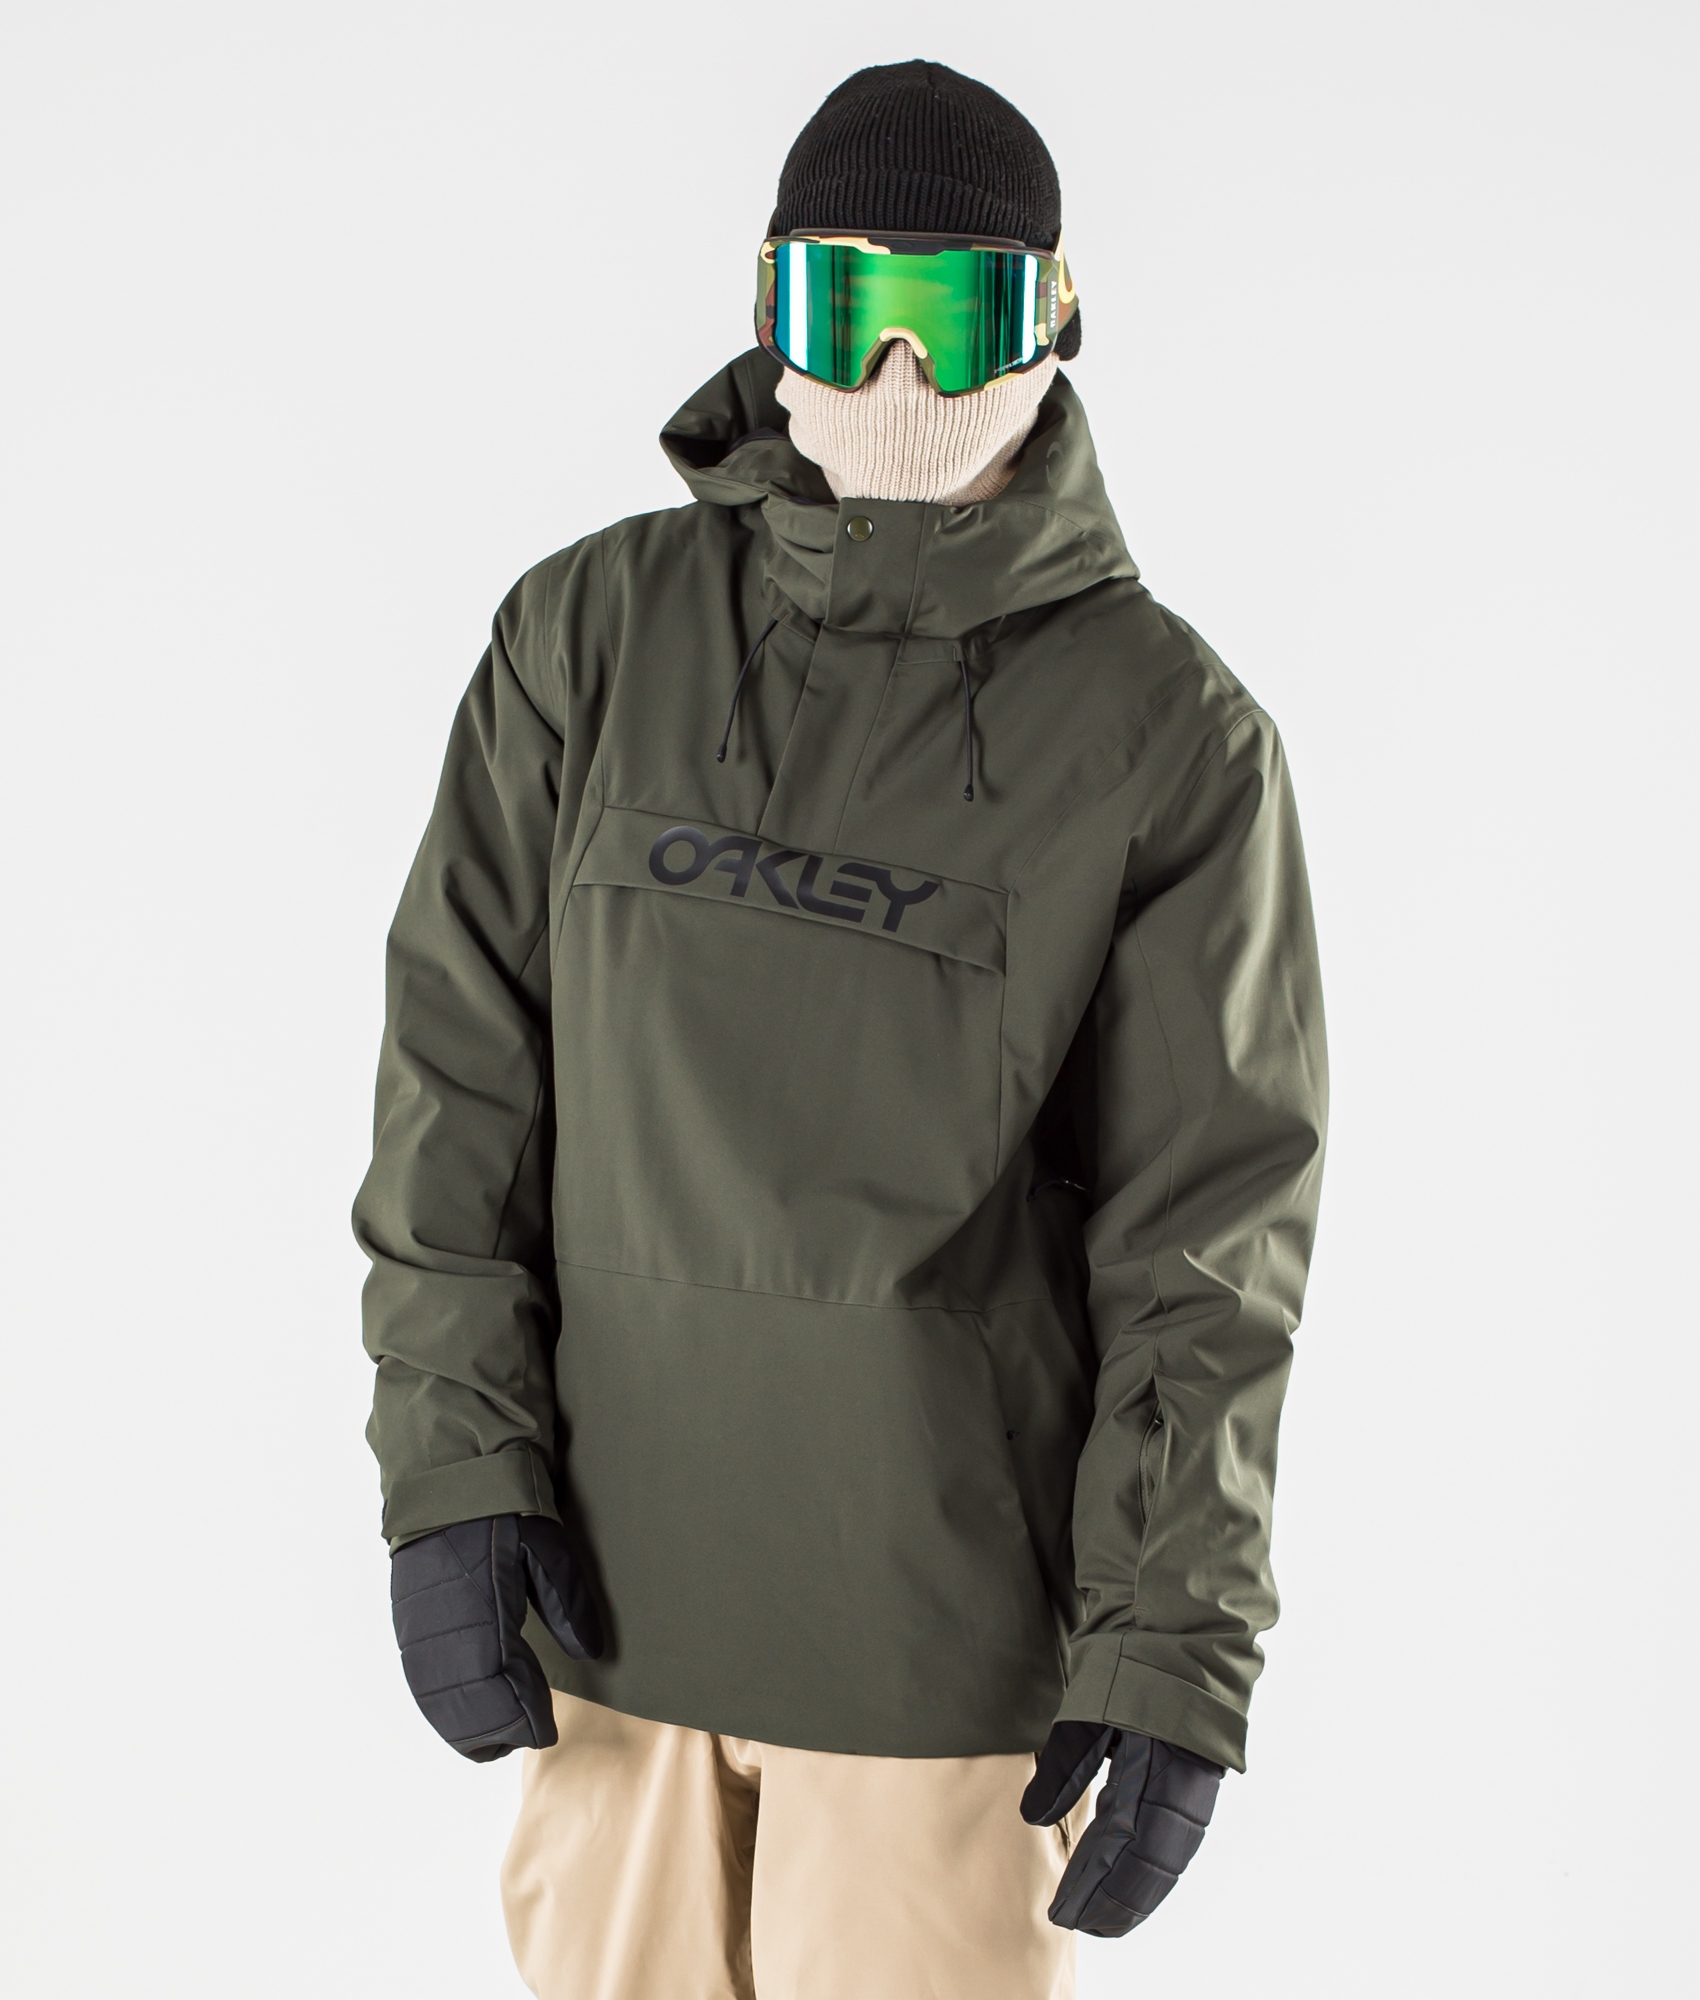 oakley anorak snow jacket